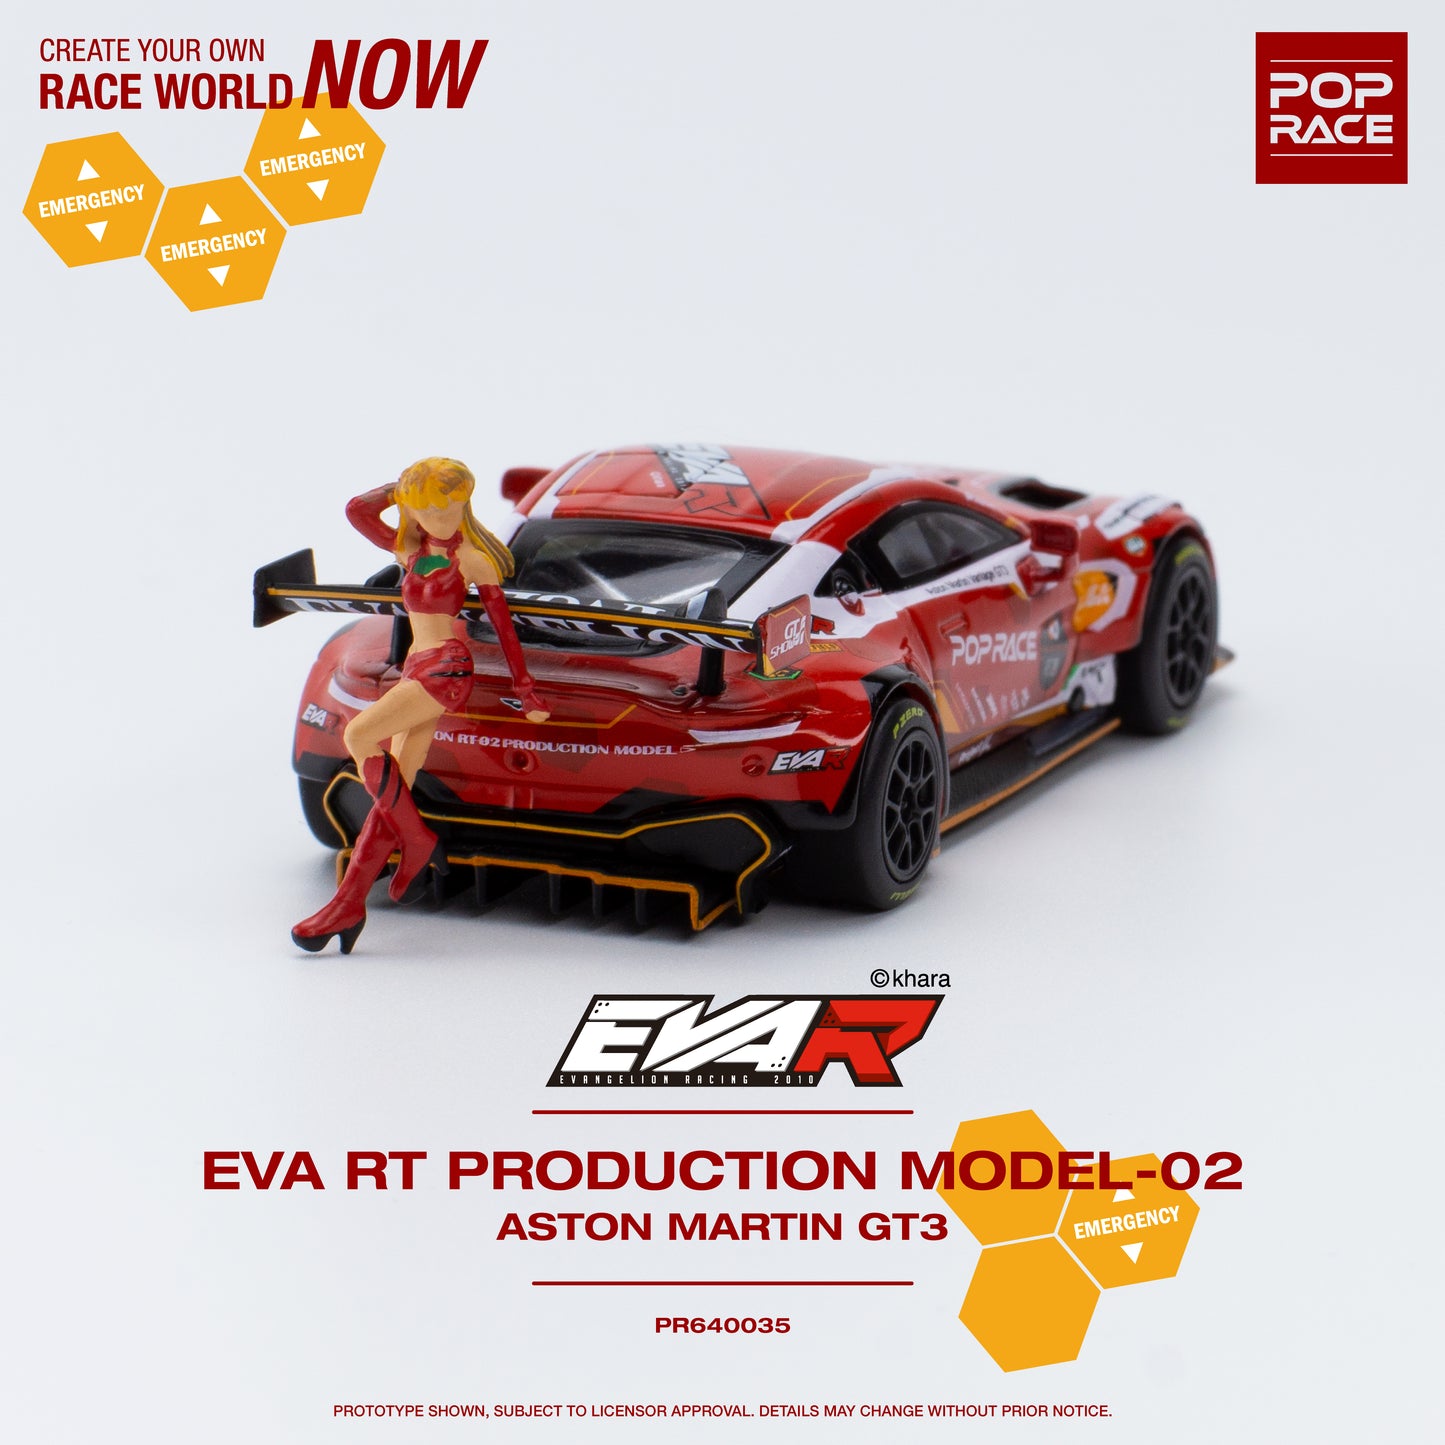 Pop Race 1/64 EVA RT PRODUCTION MODEL-02 ASTON MARTIN GT3 WITH FIGURE